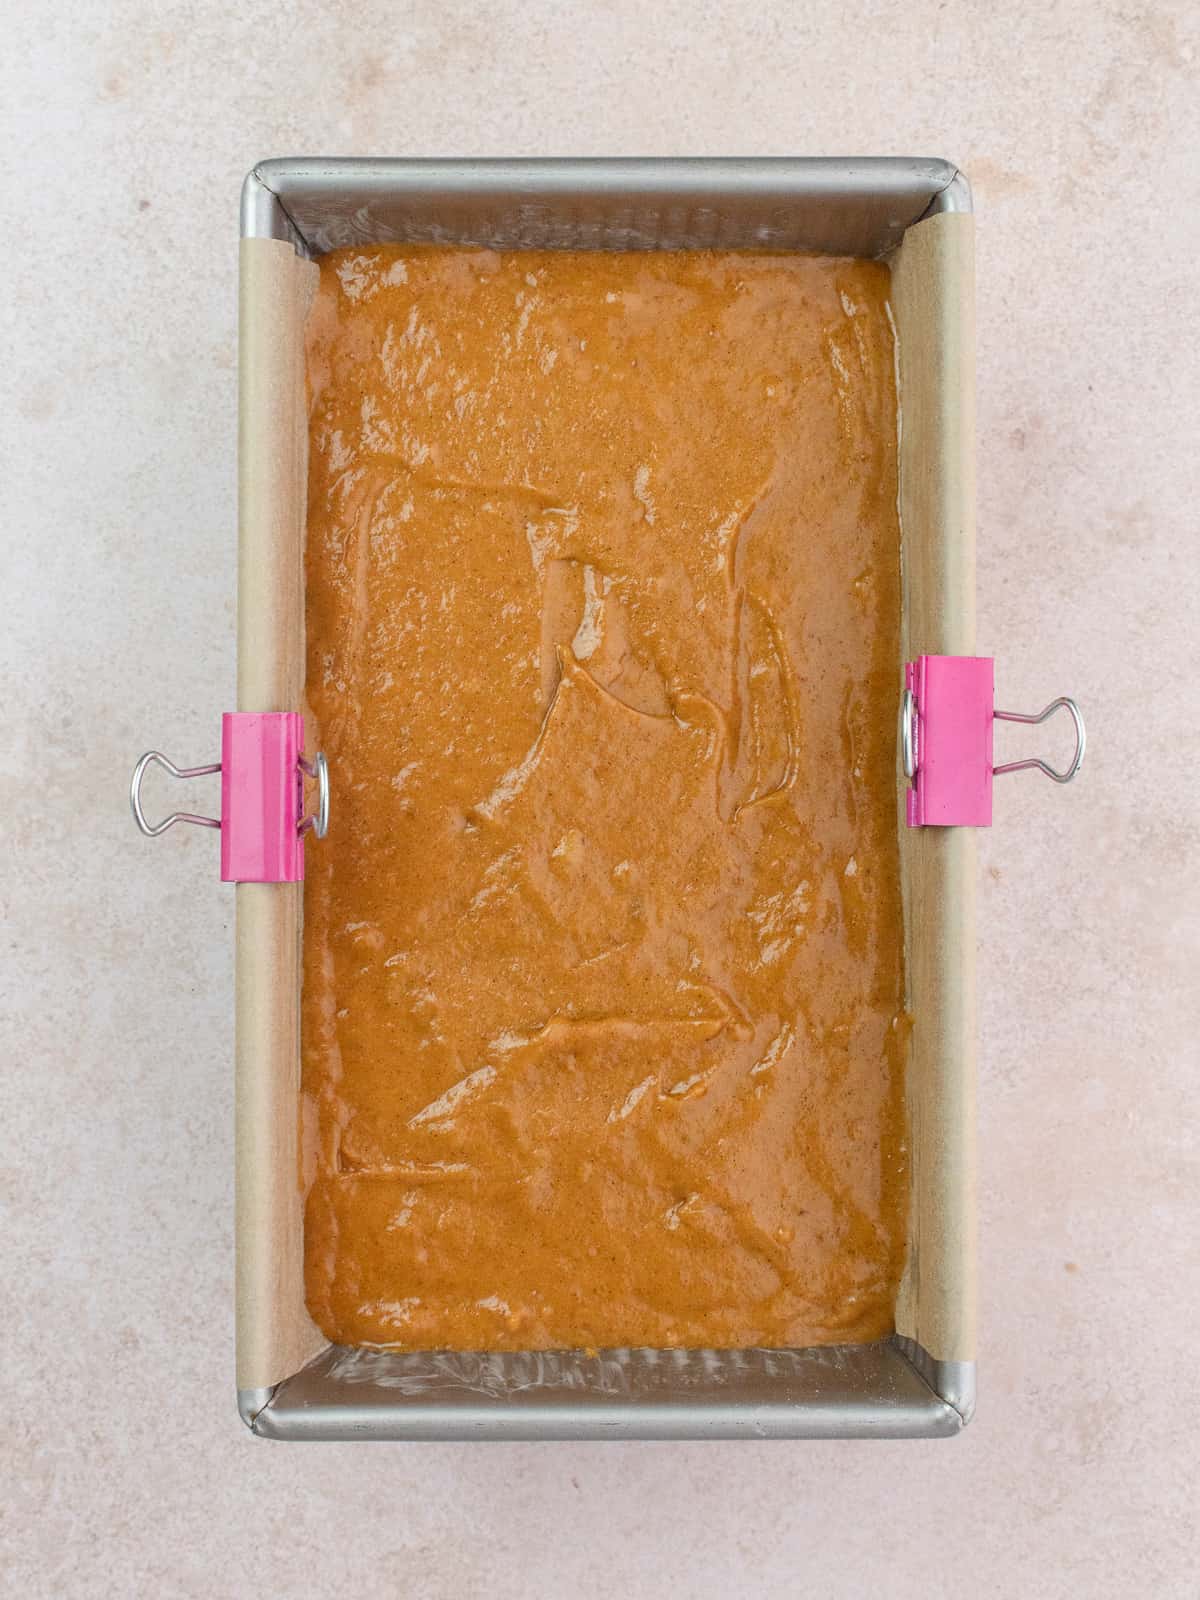 Pumpkin batter in loaf pan